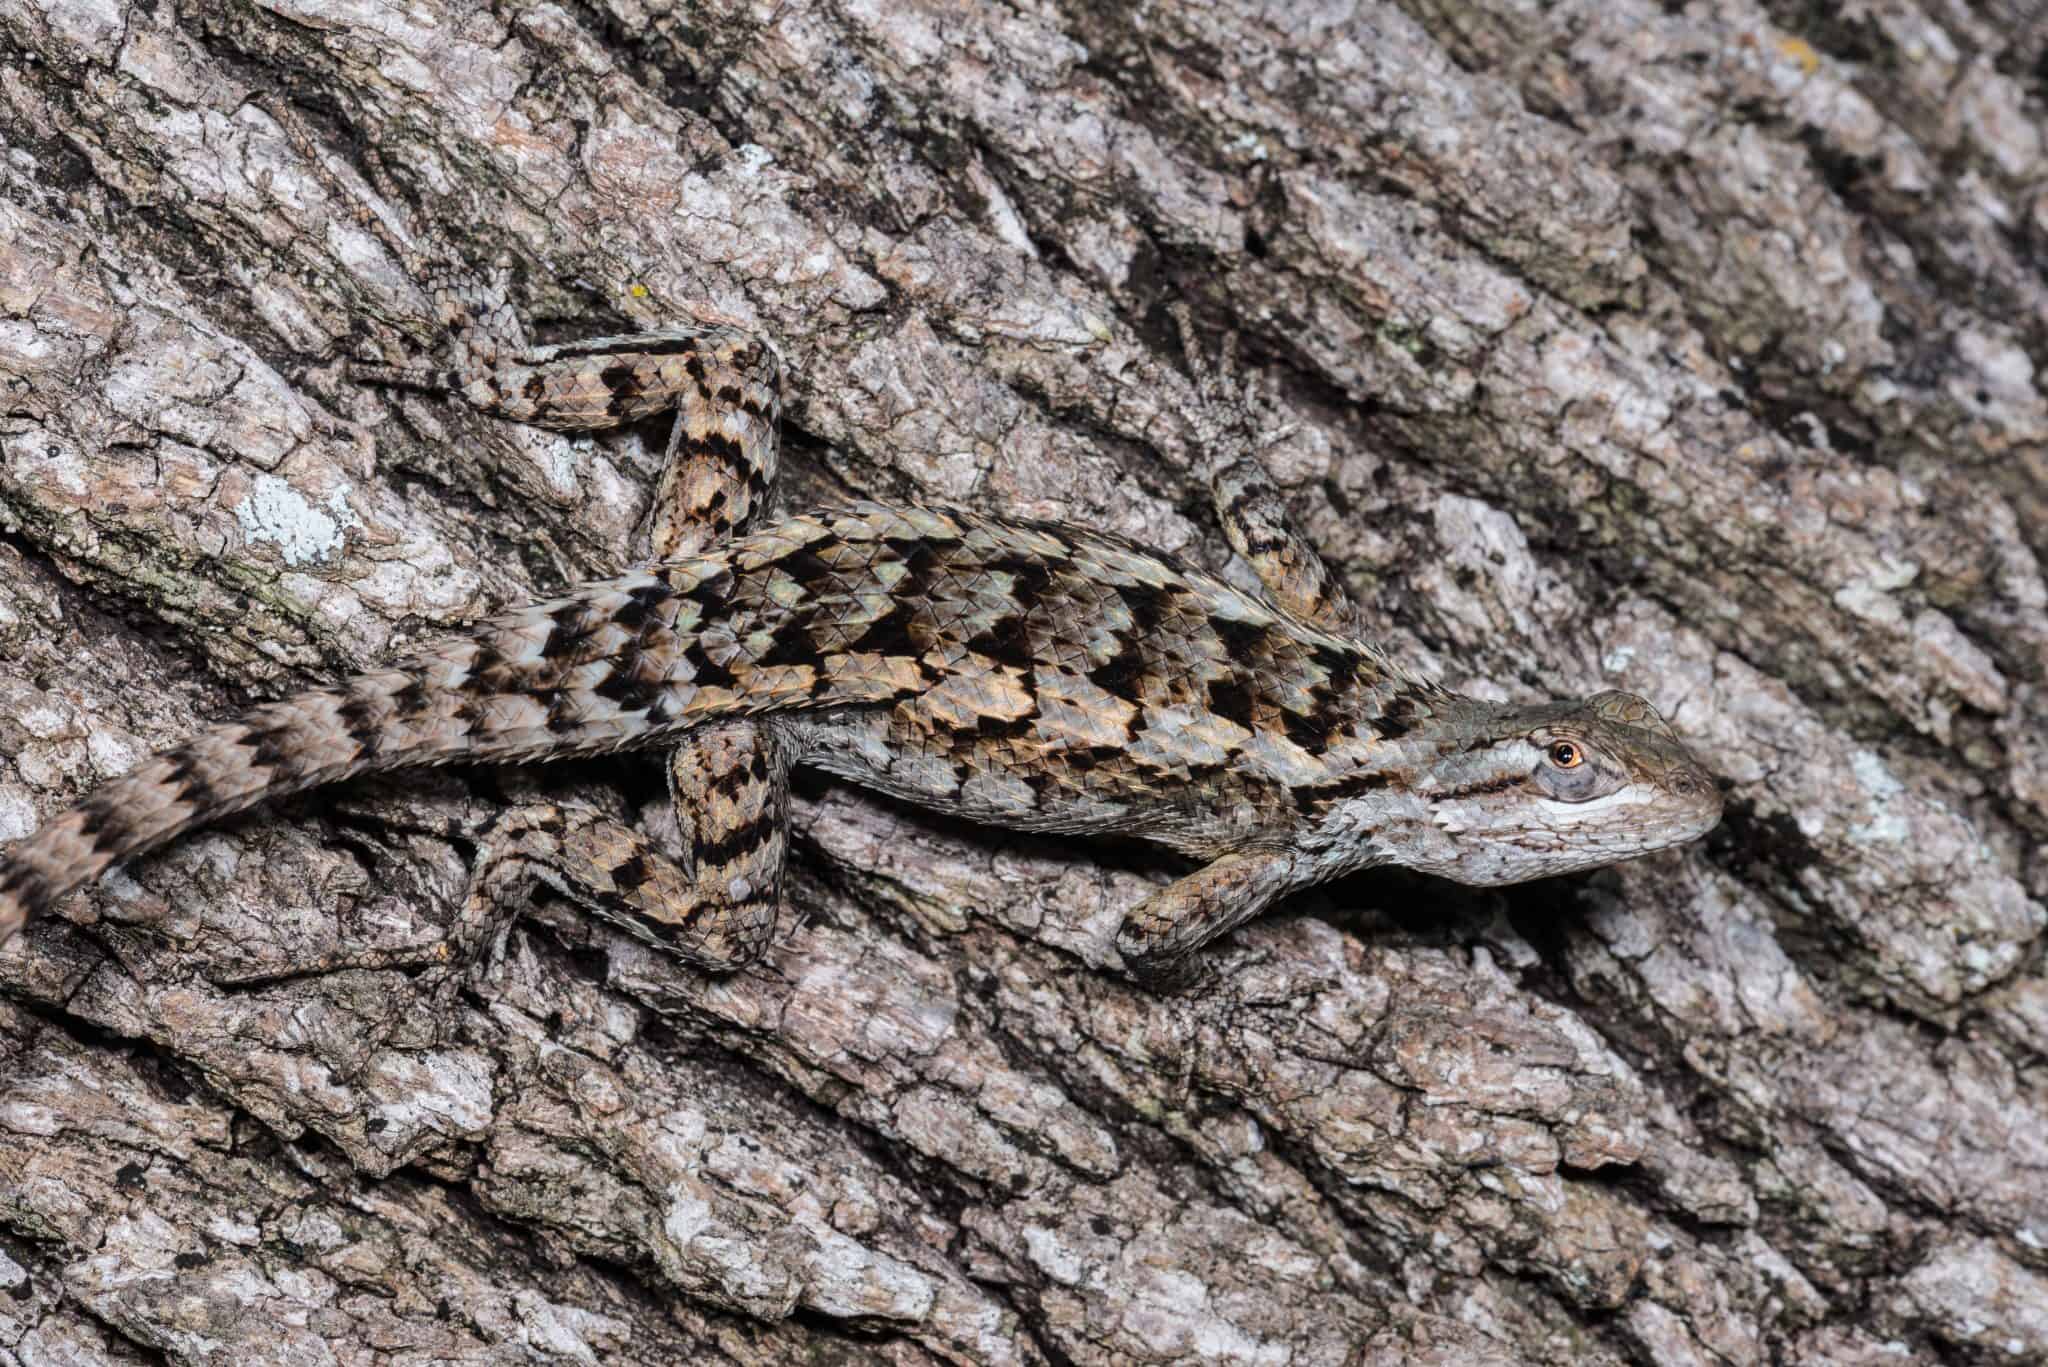 Lizards In South Texas - Daune Eolande